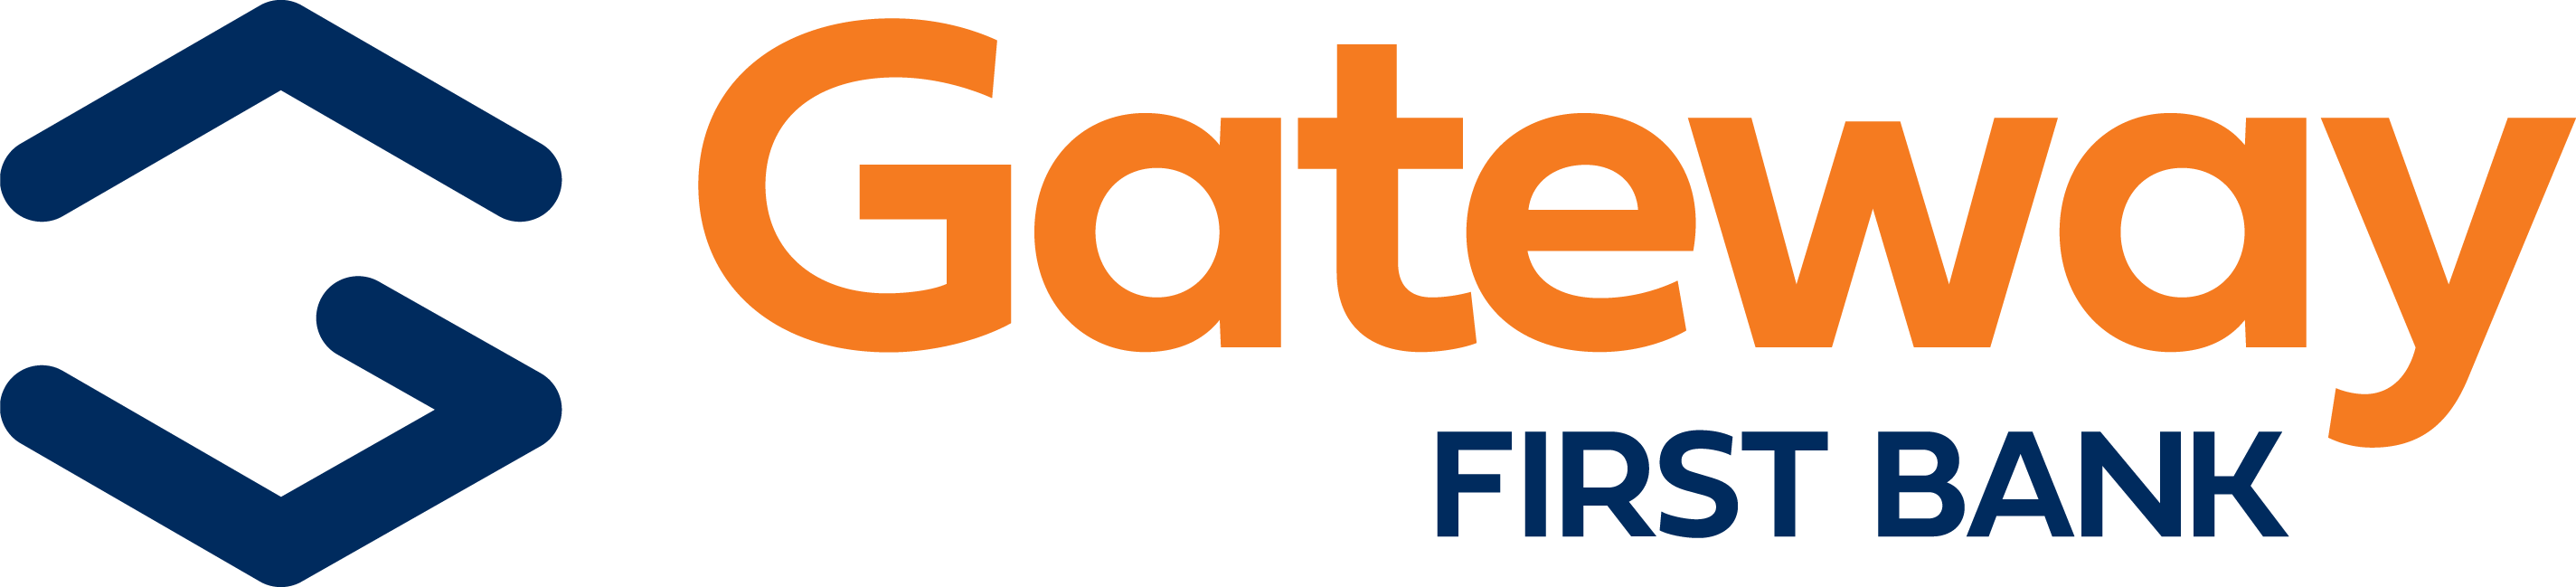 Gateway First Bank logo